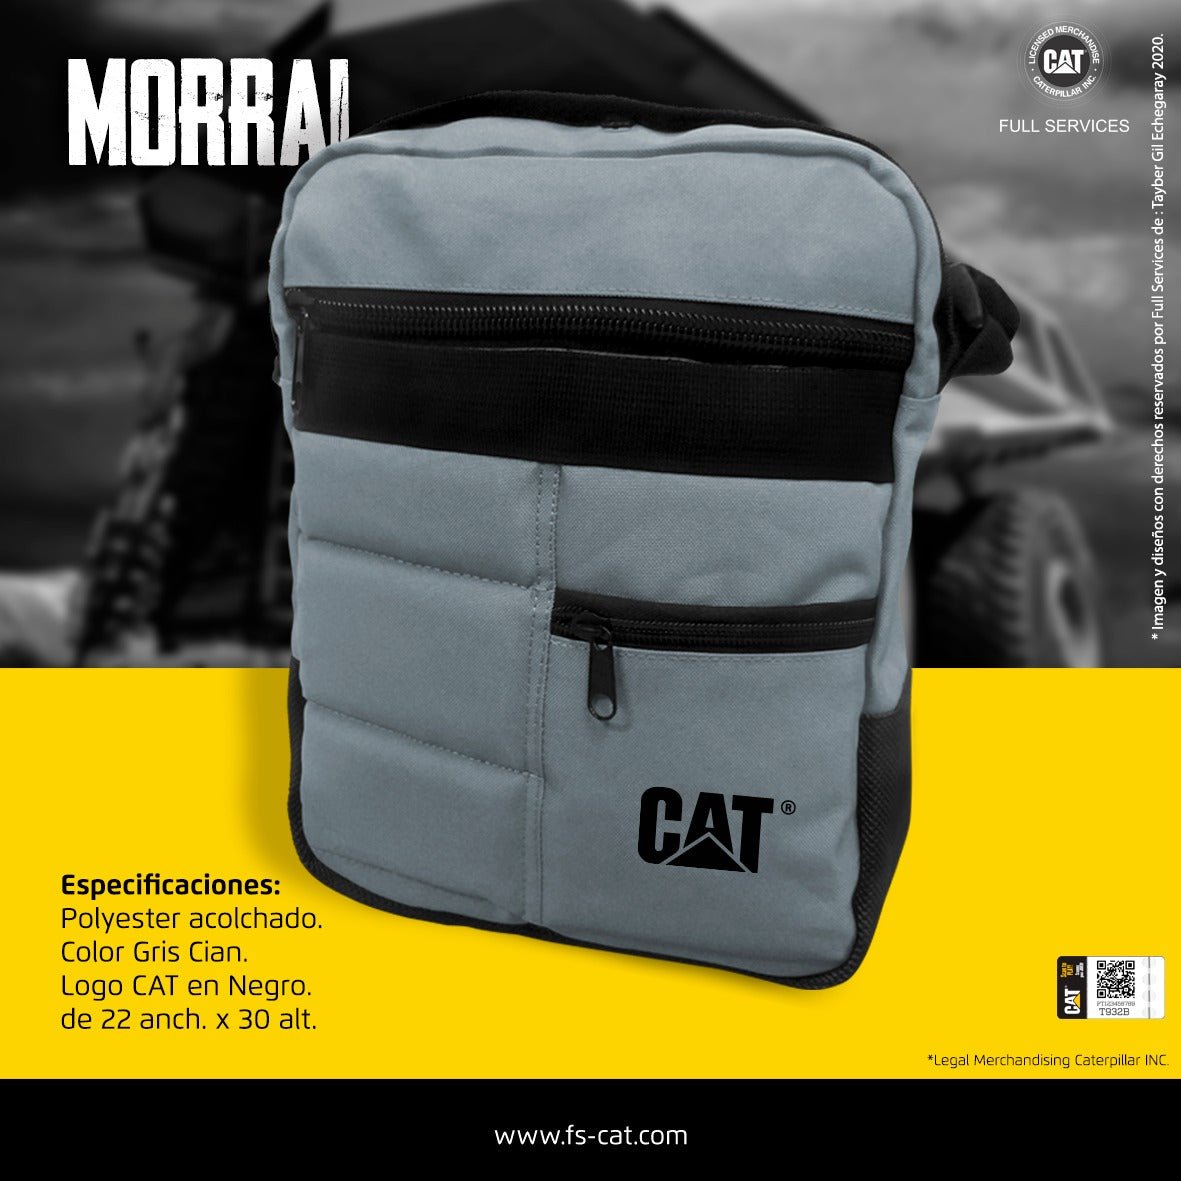 Morral Cat Gris Cian - CAT SERVICE PERU S.A.C.